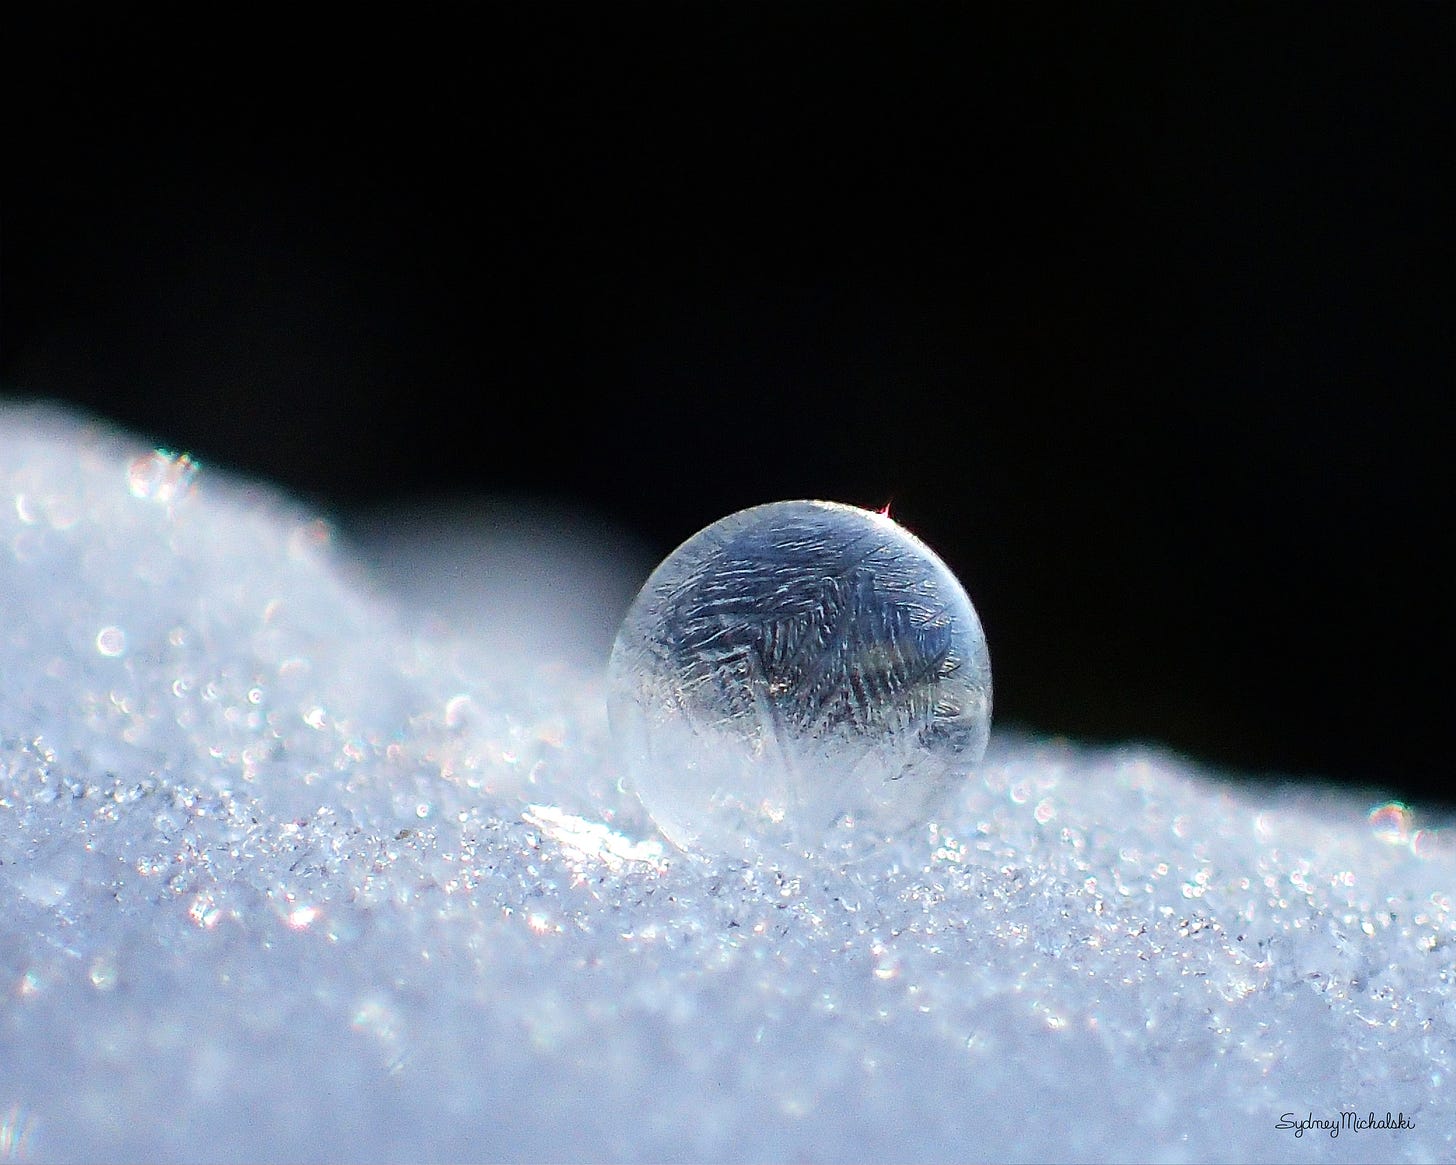 A frozen bubble rests on sparkling snow.